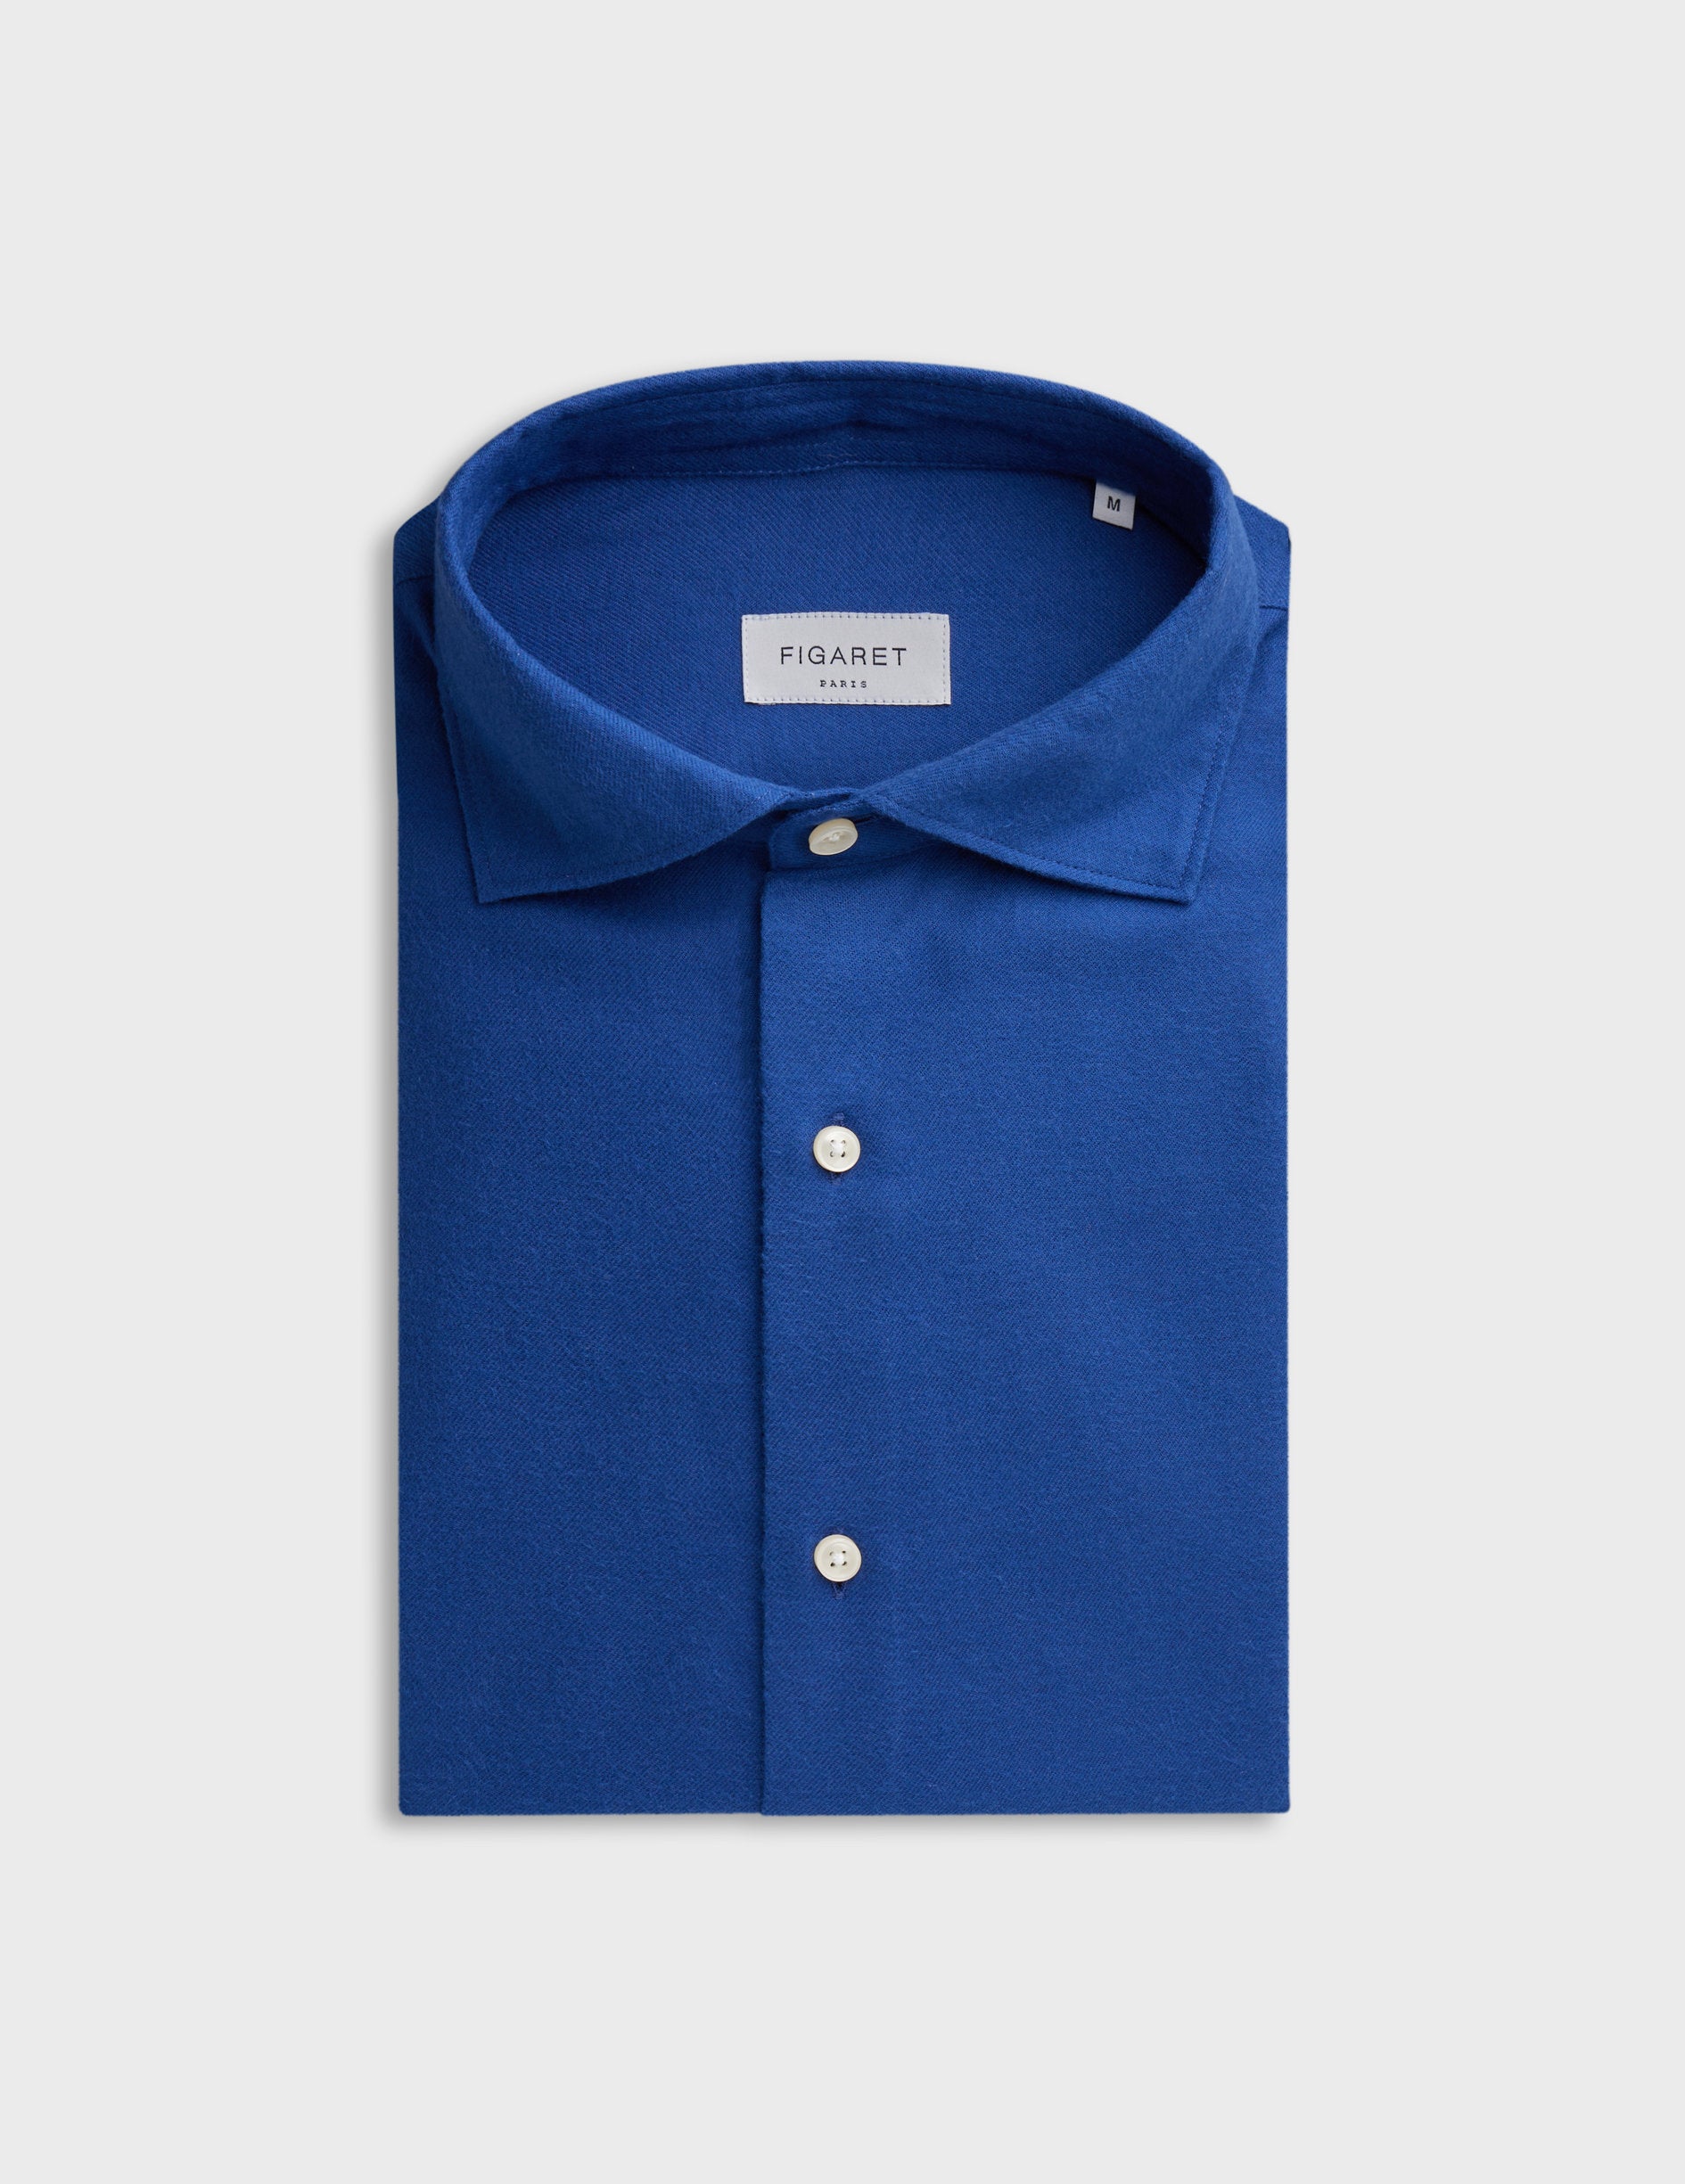 Blue aristote shirt - Flannel - Italian Collar